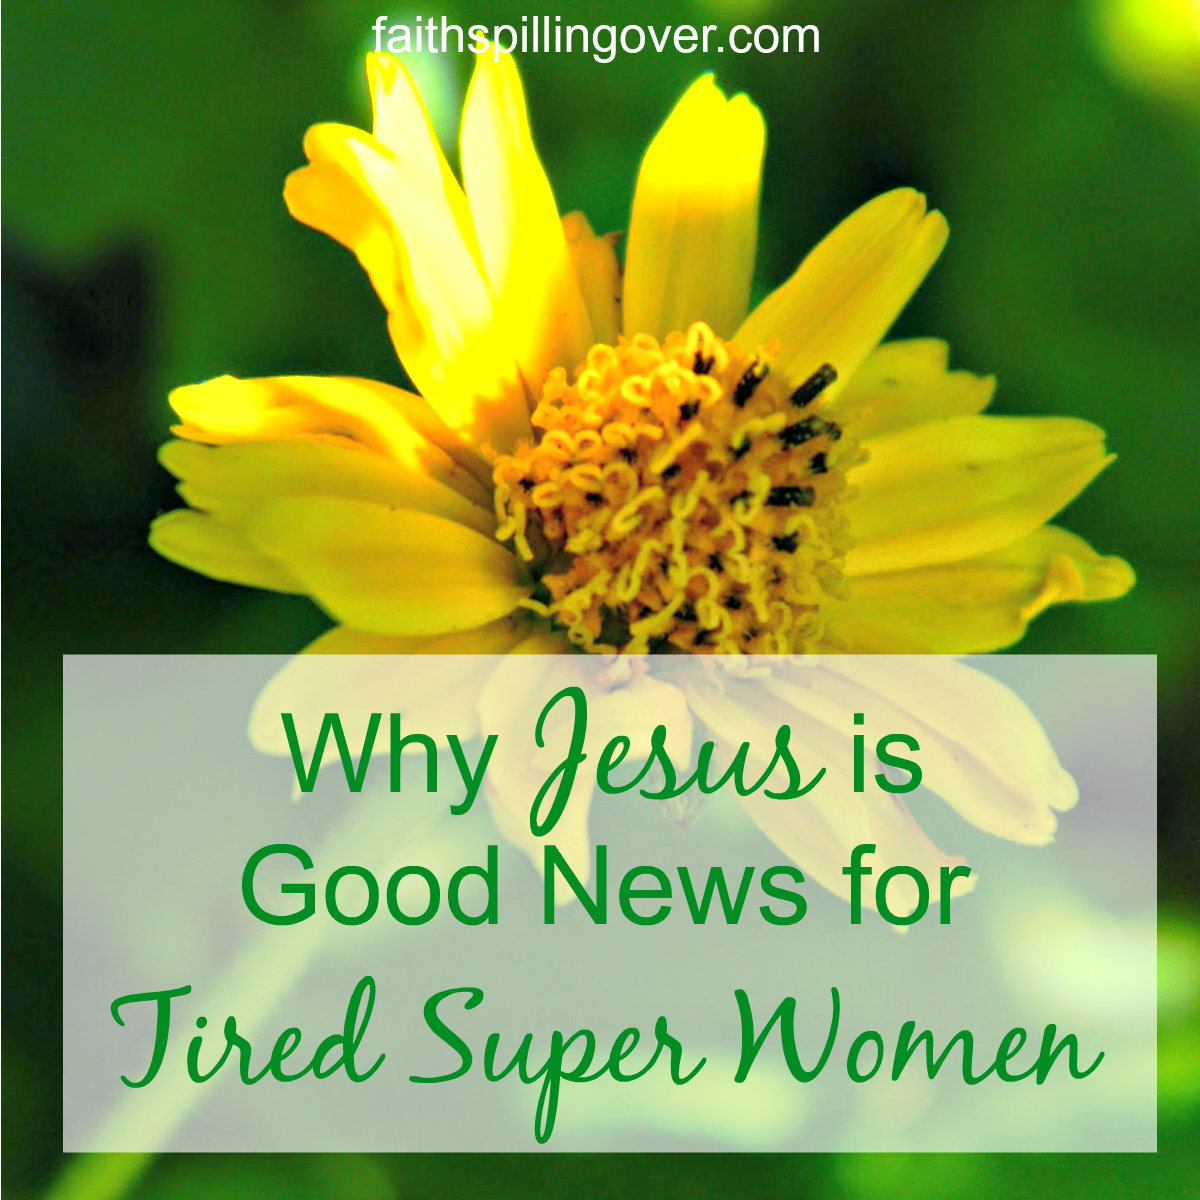 Jesus is good new for tired superwomen